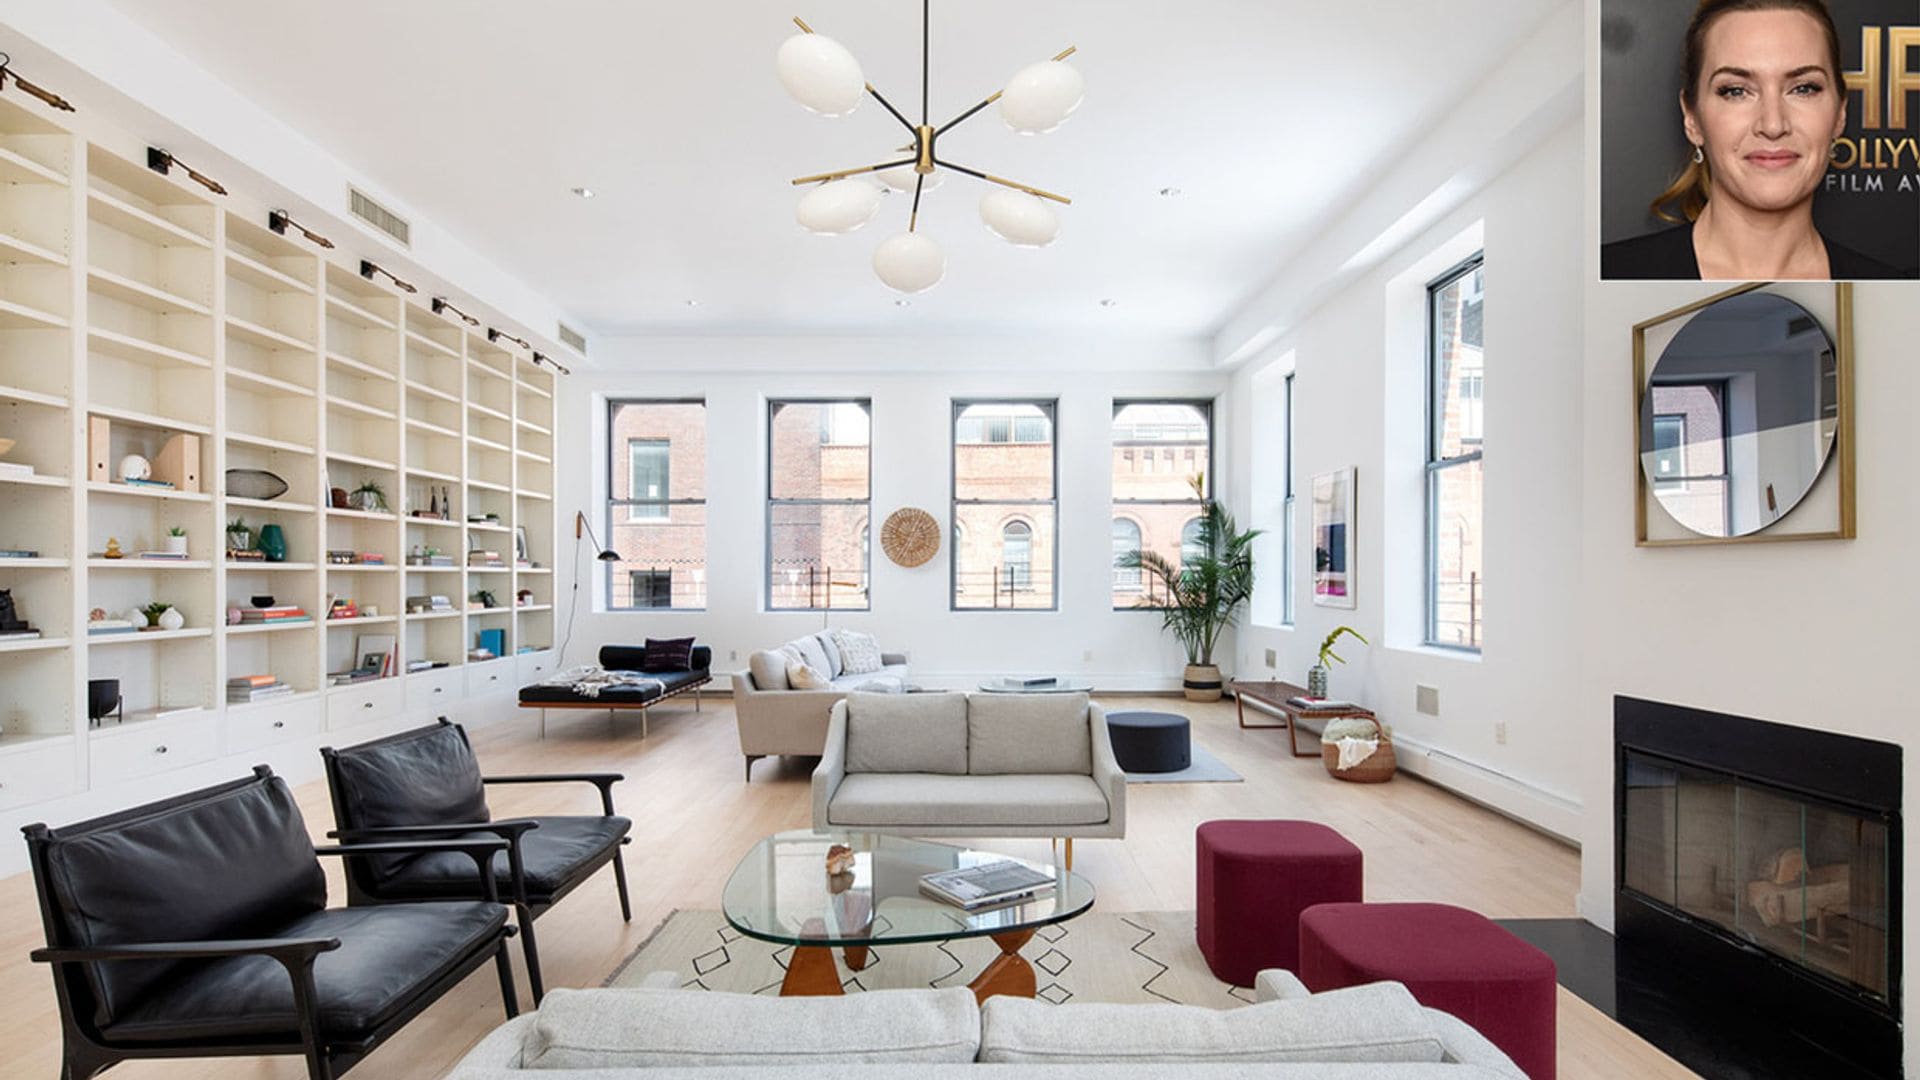 Kate Winslet vende su fabuloso apartamento de Manhattan